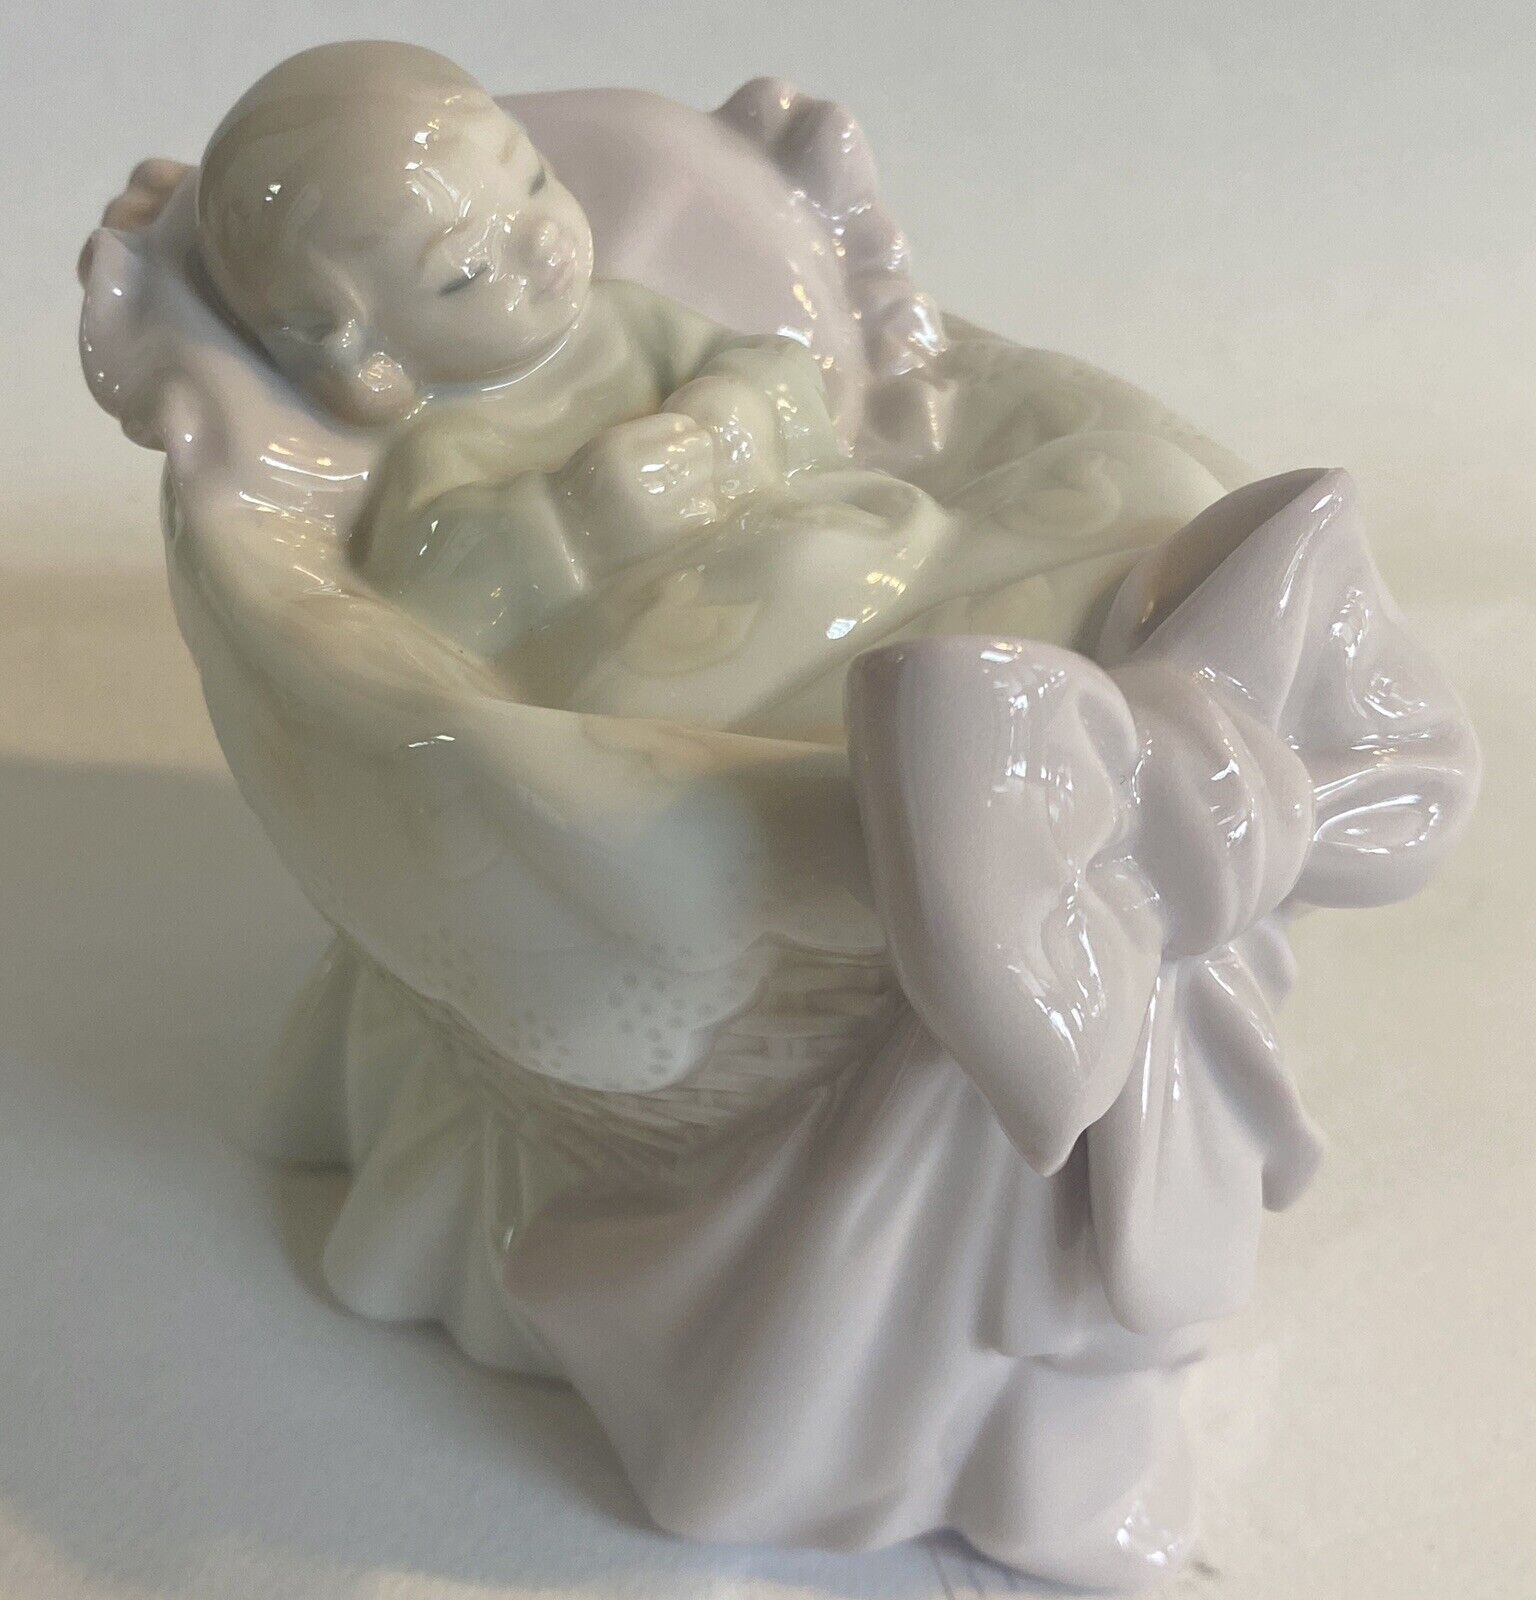 Lladro Figurines “New Treasure Girl” 6977